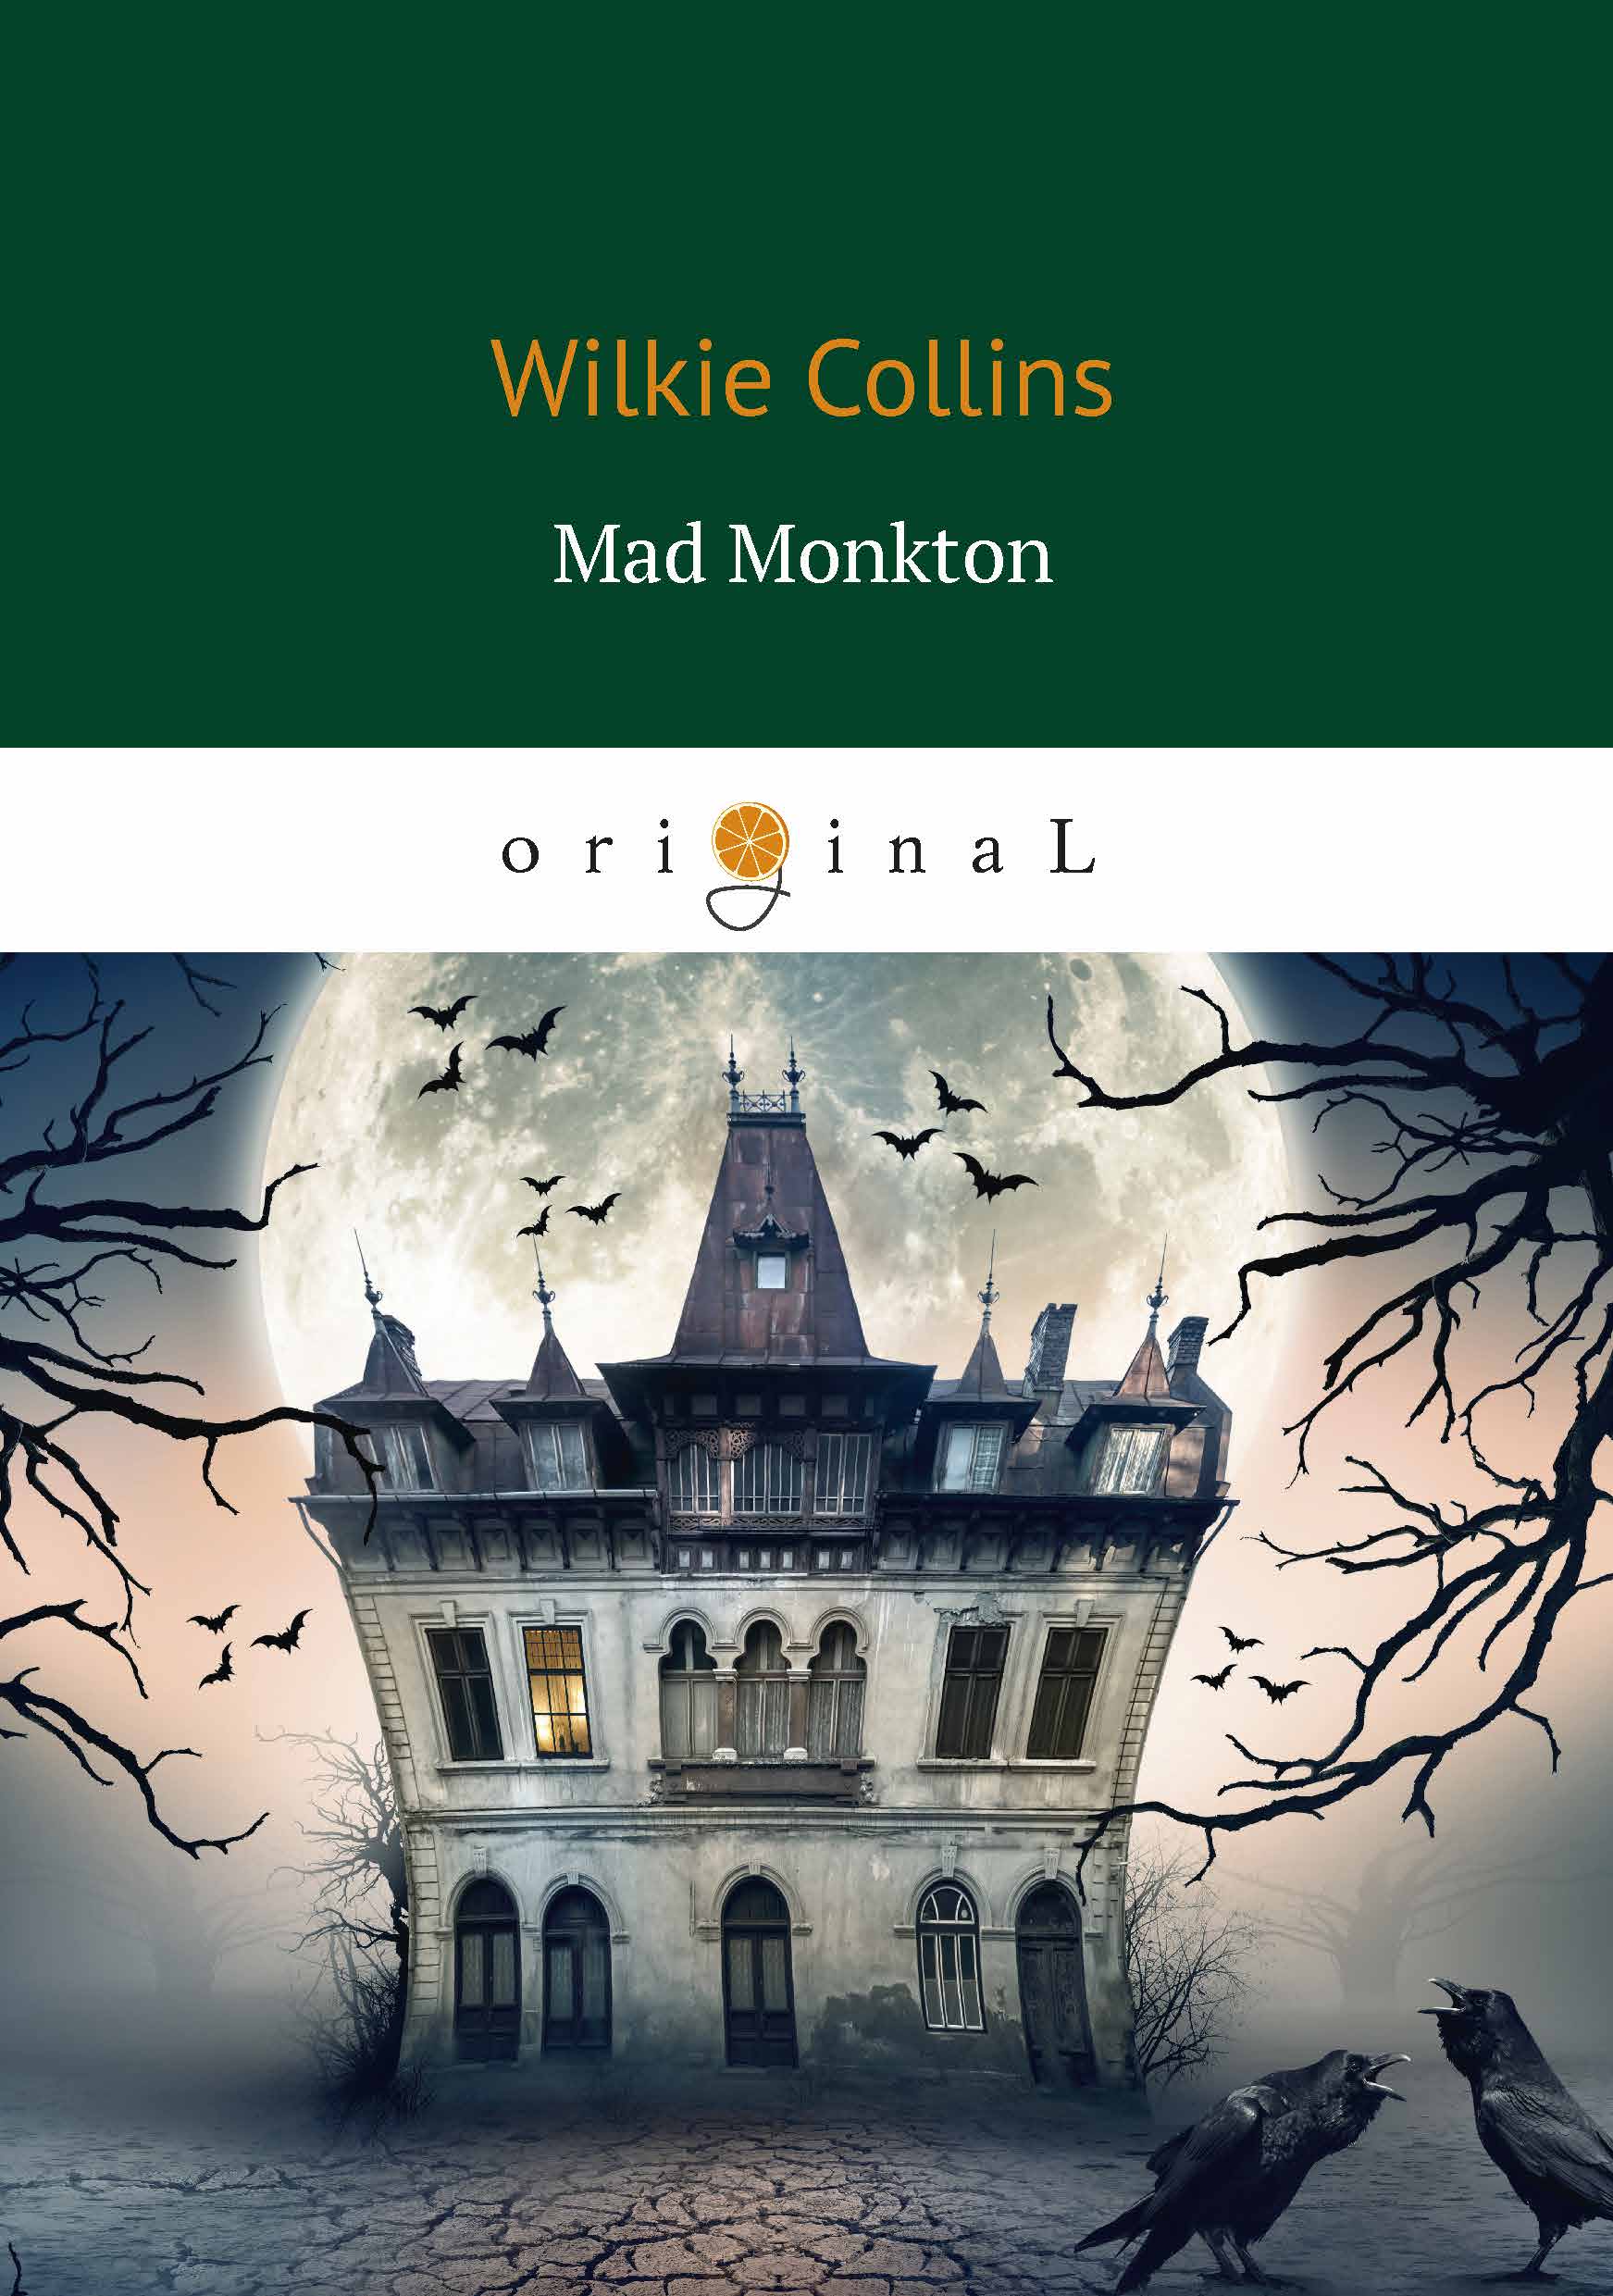 Mad Monkton. Wilkie Collins